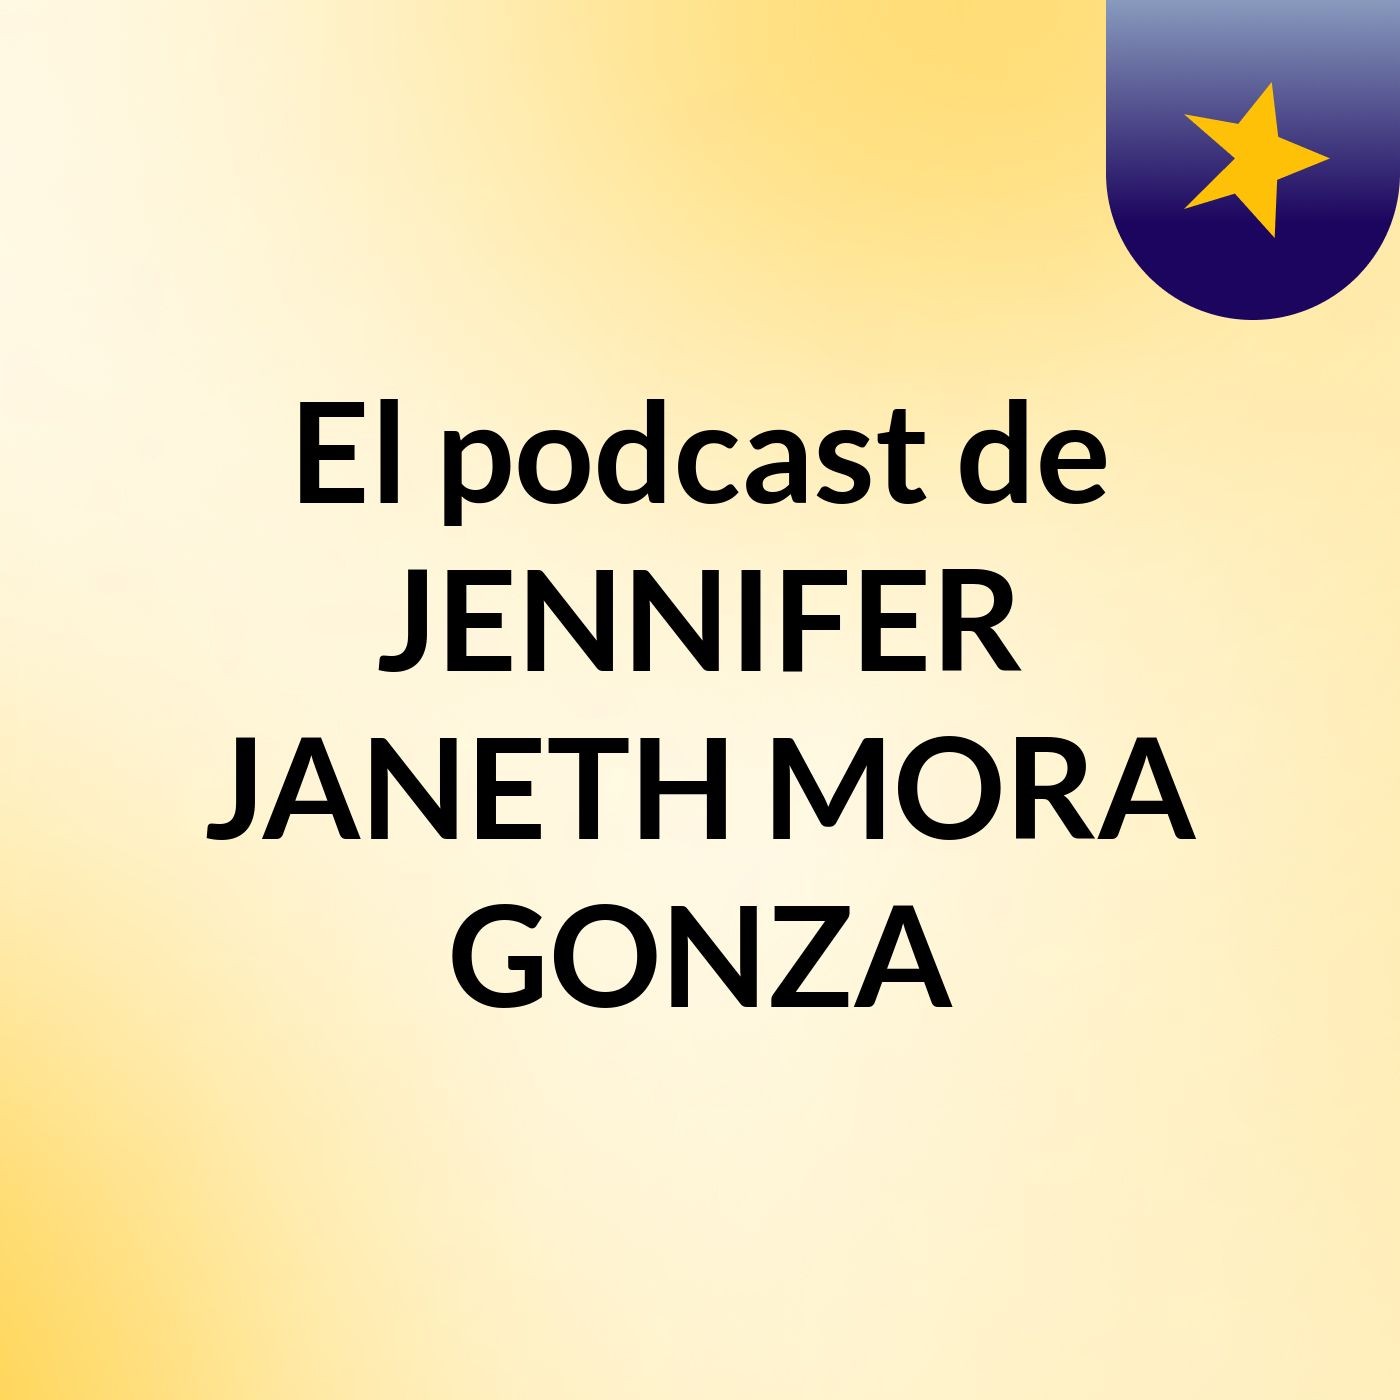 El podcast de JENNIFER JANETH MORA GONZA